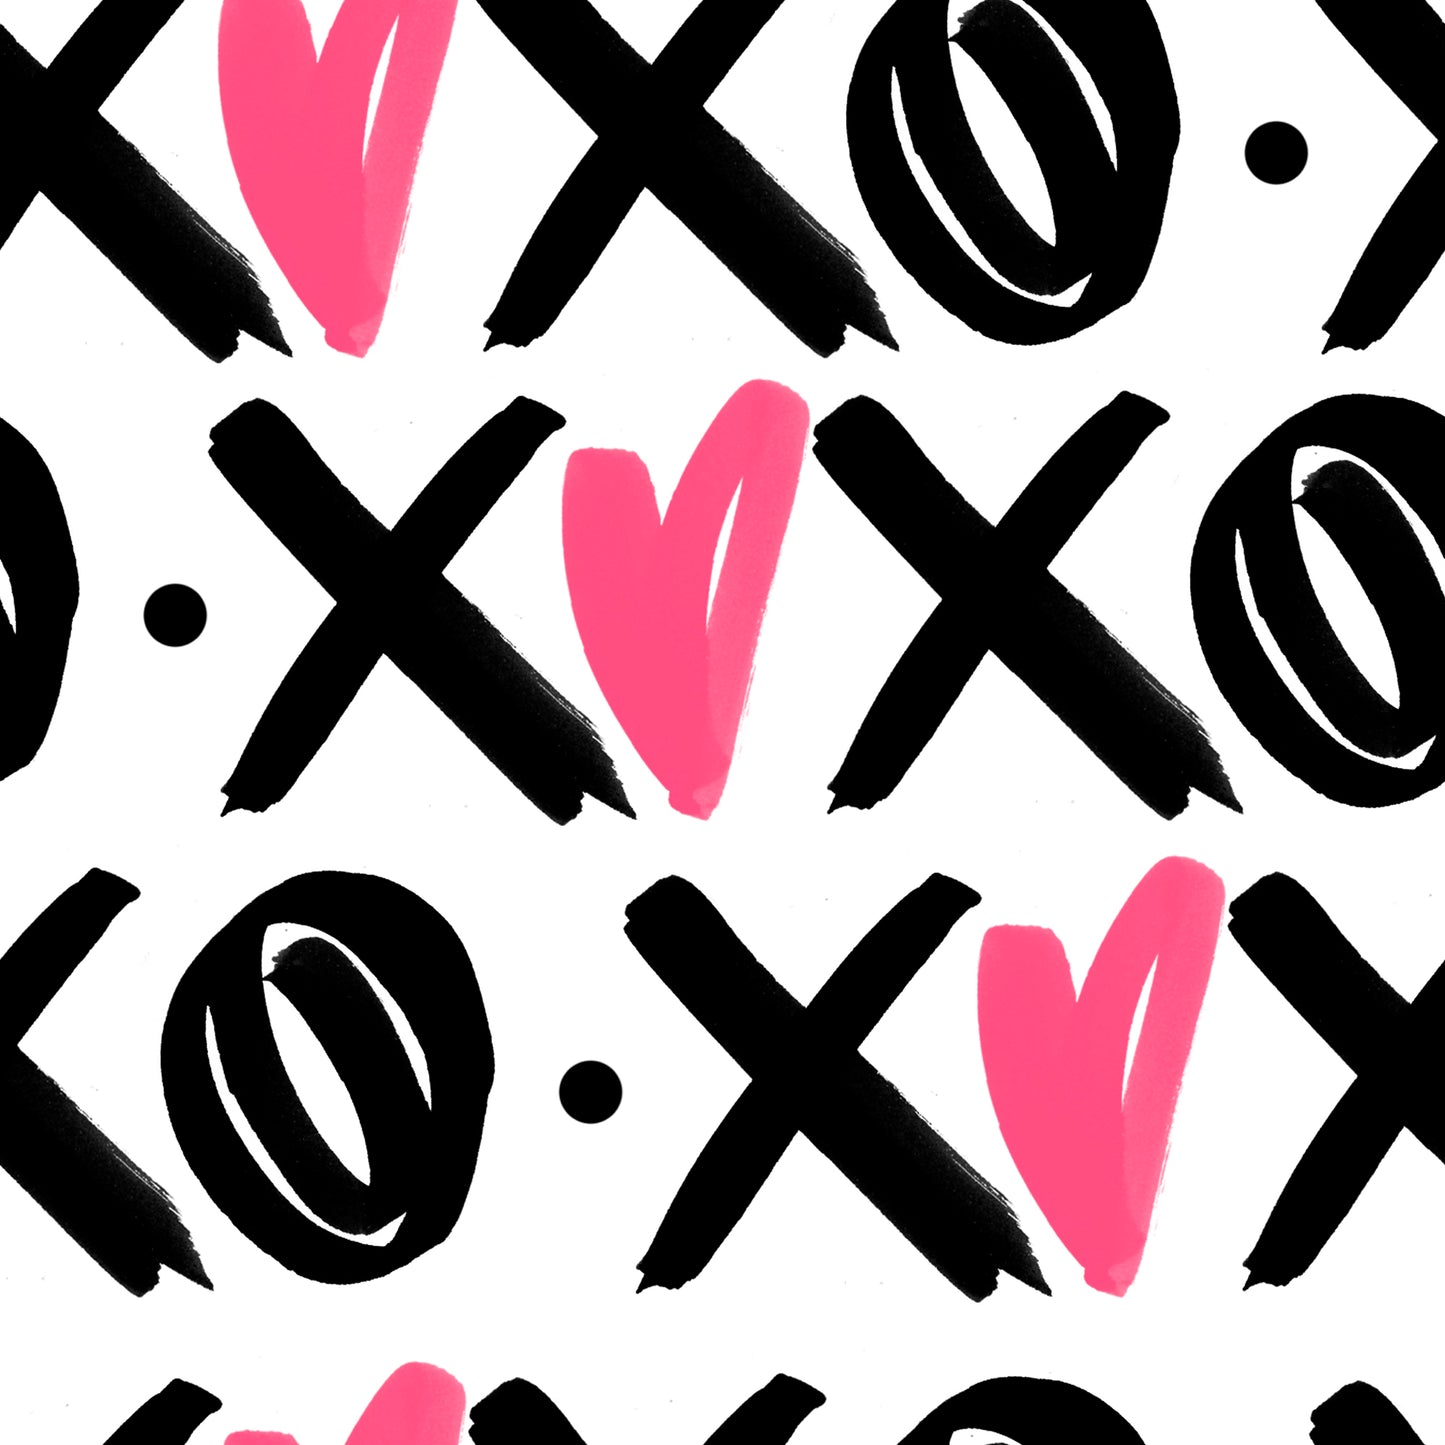 My Love Is Like XOXO